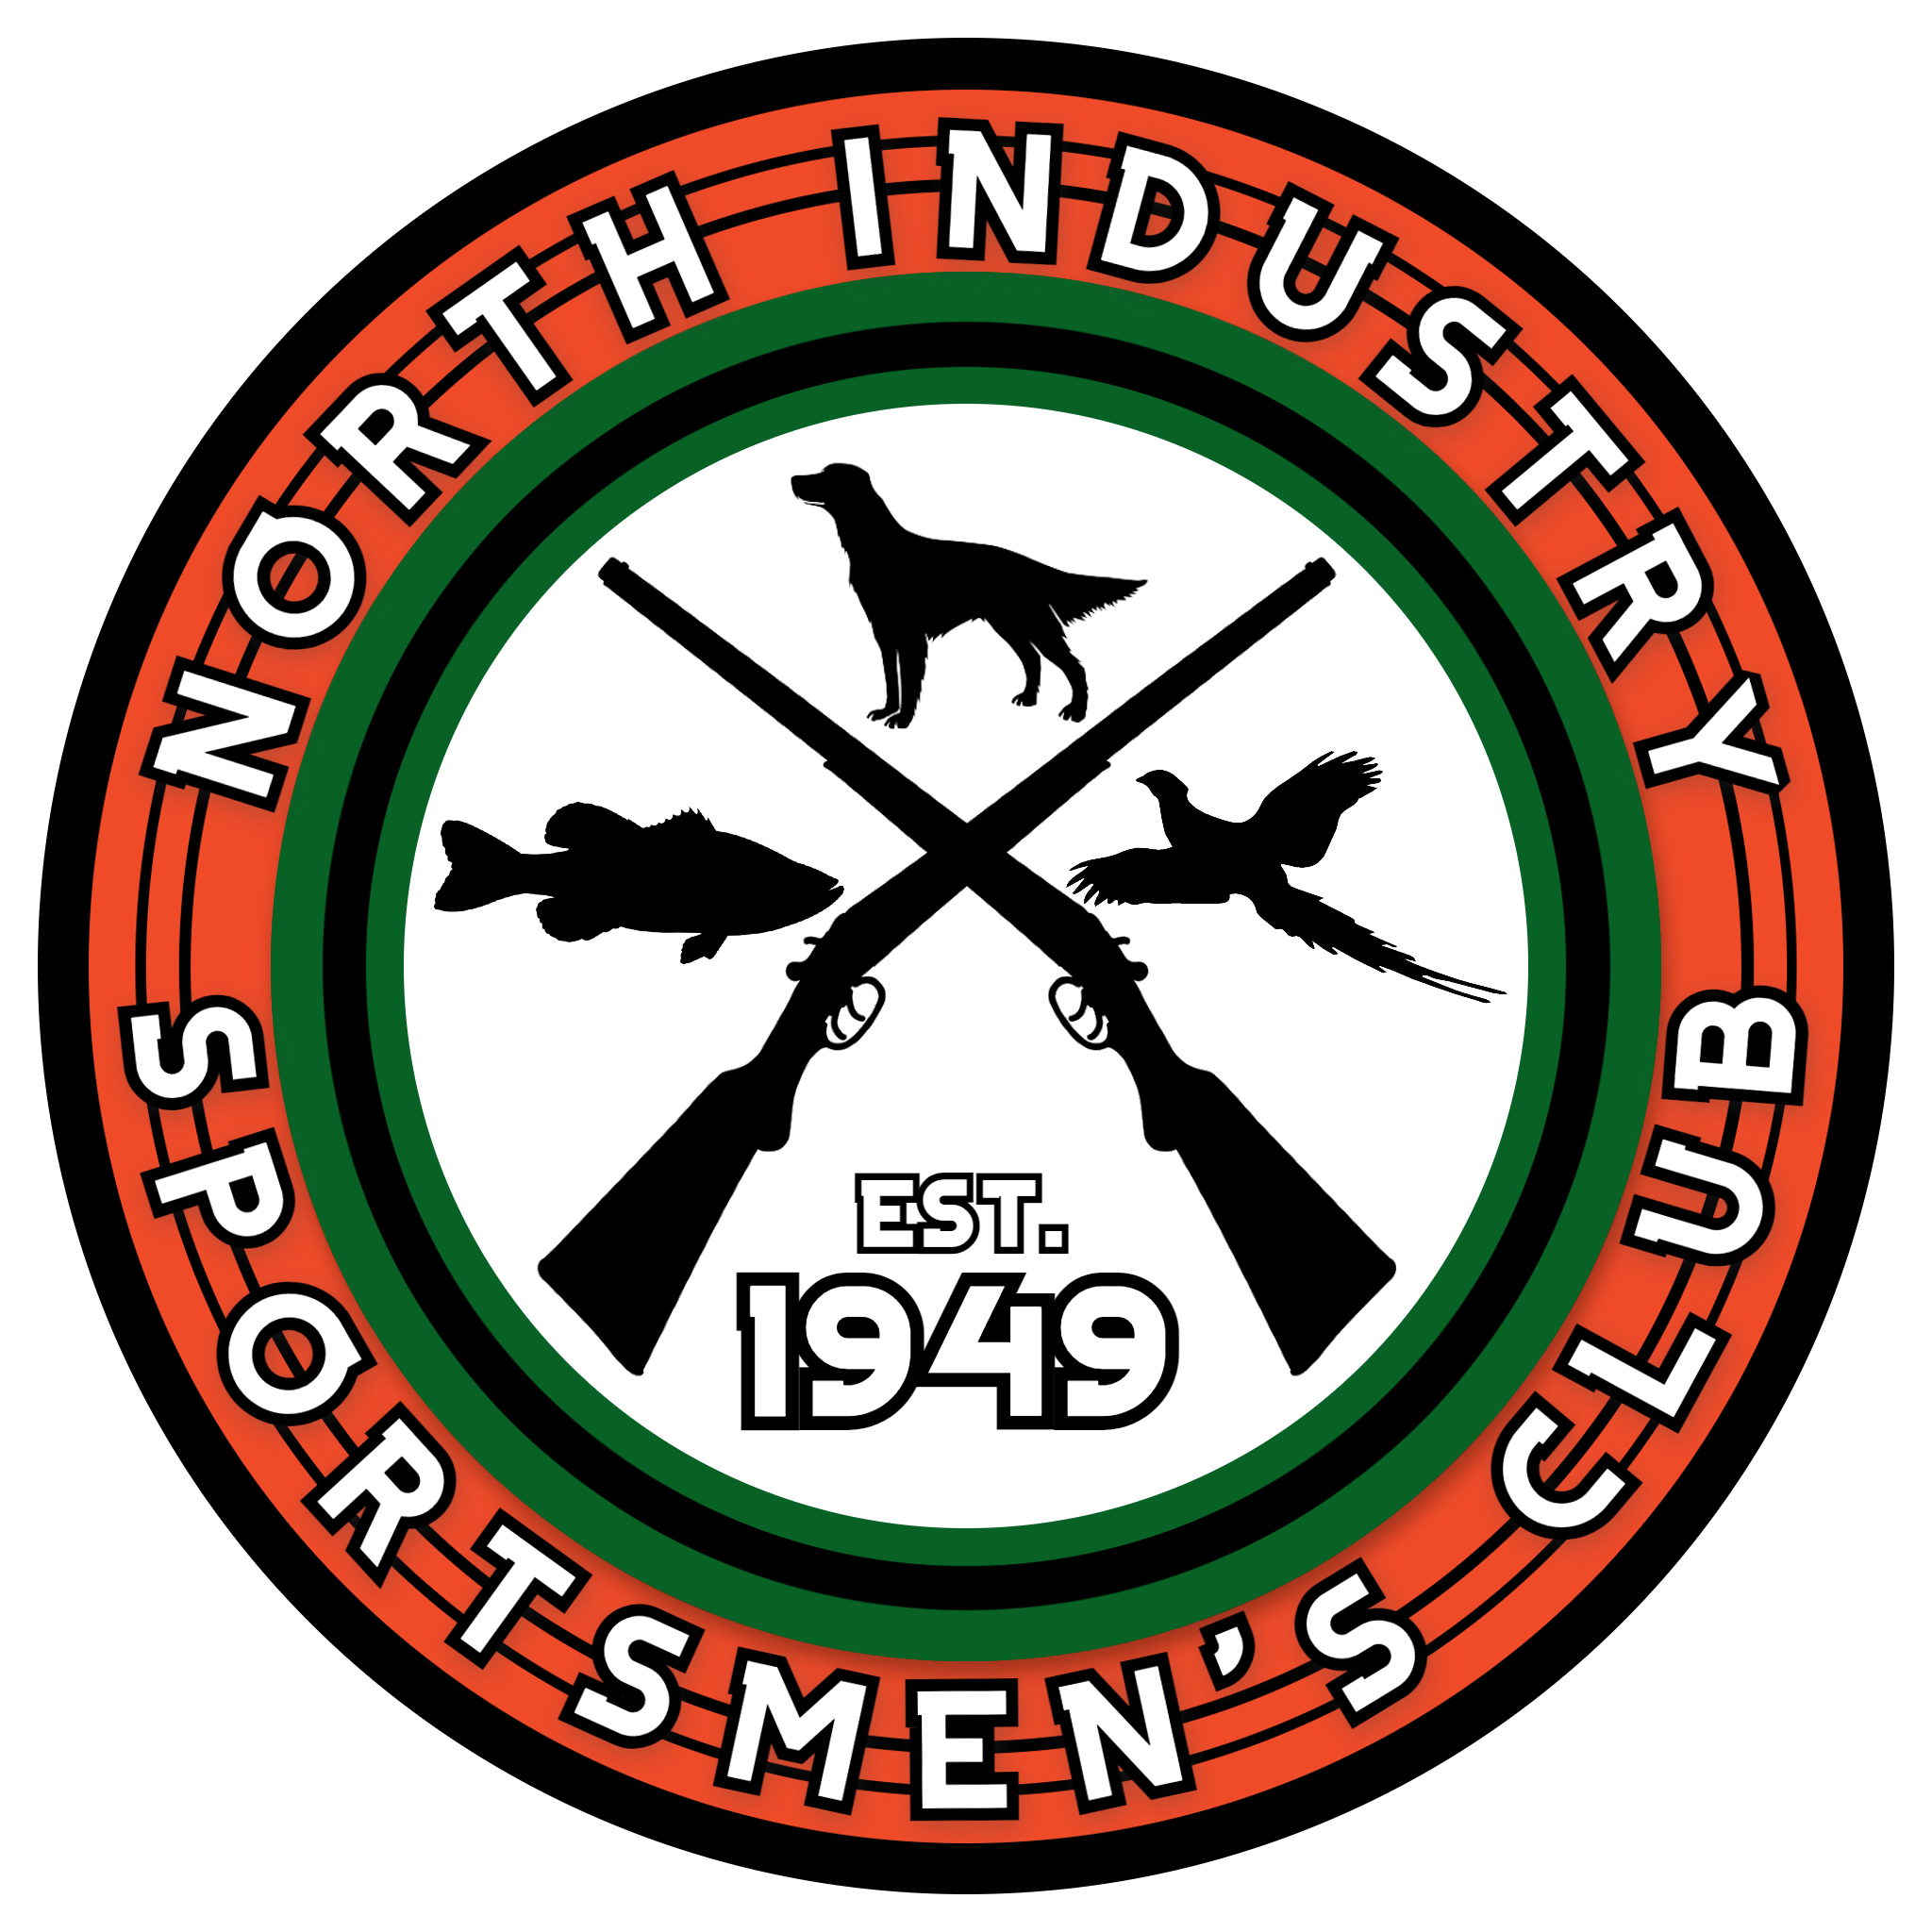 North Industry Sportsmen's Club